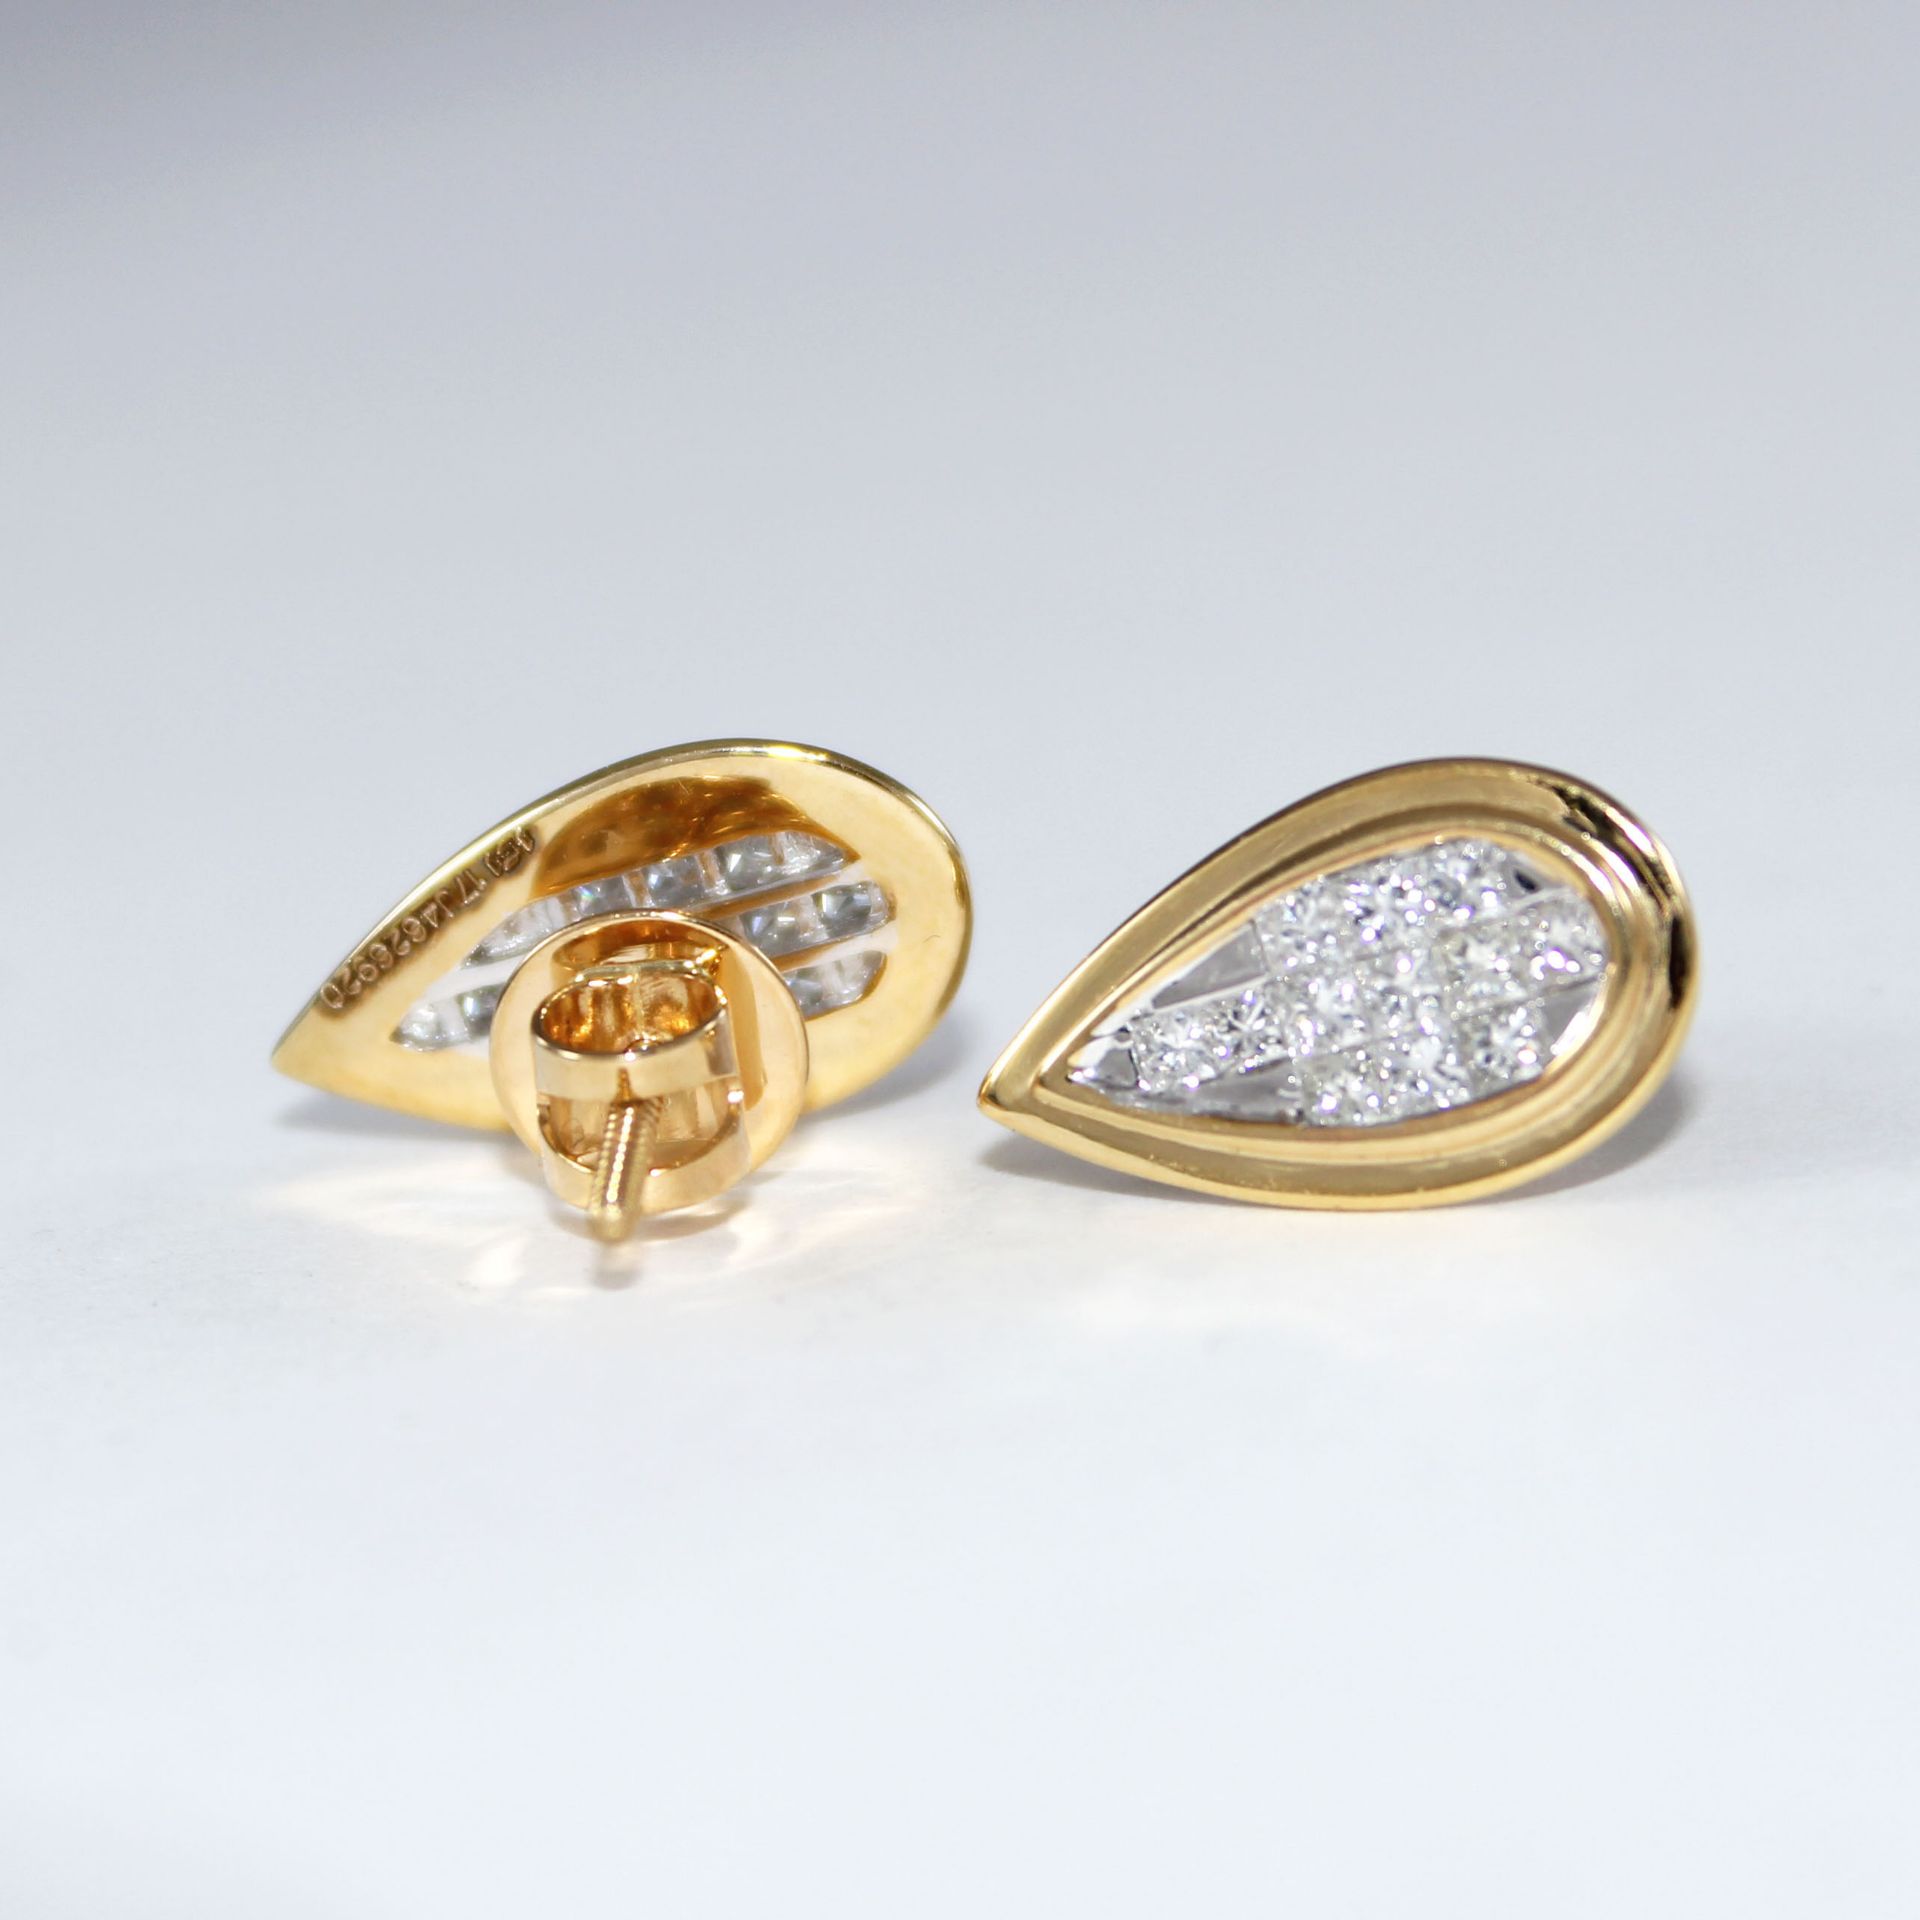 IGI Certified 14 K / 585 Yellow Gold Diamond Earring Studs - Image 2 of 6